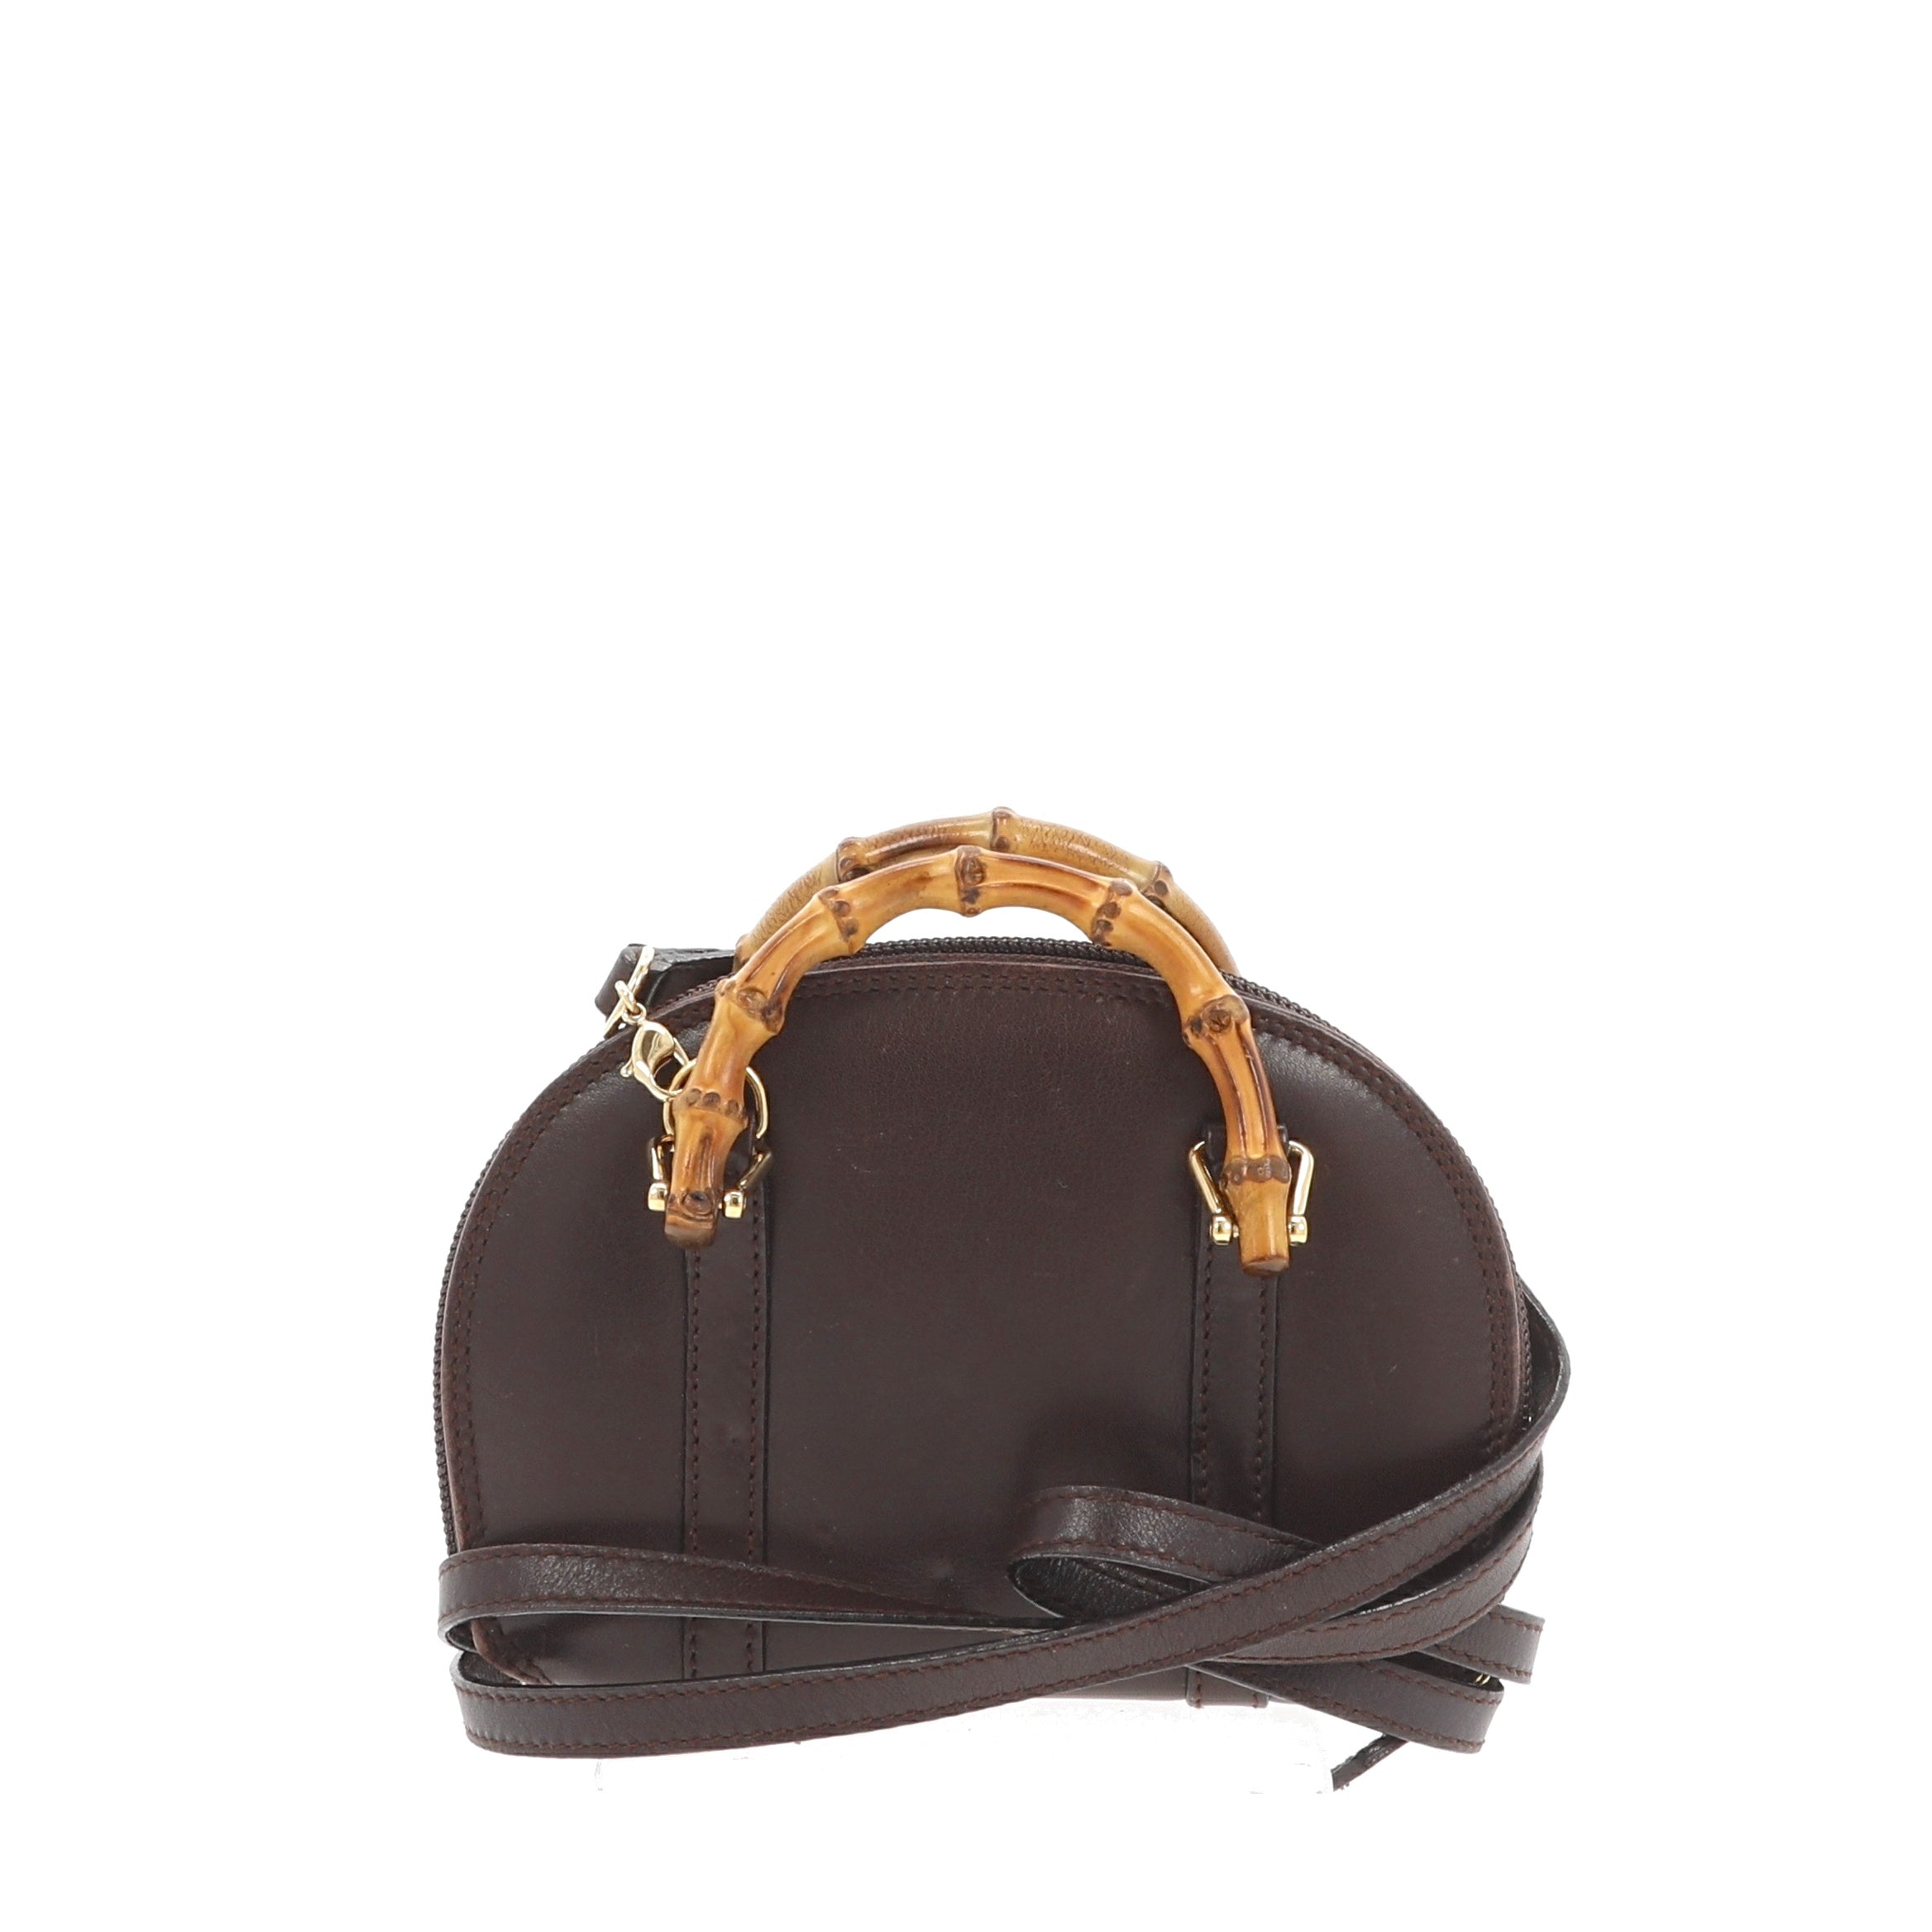 Gucci Women's Bags & Gucci Bamboo | Authenticity Guaranteed | eBay